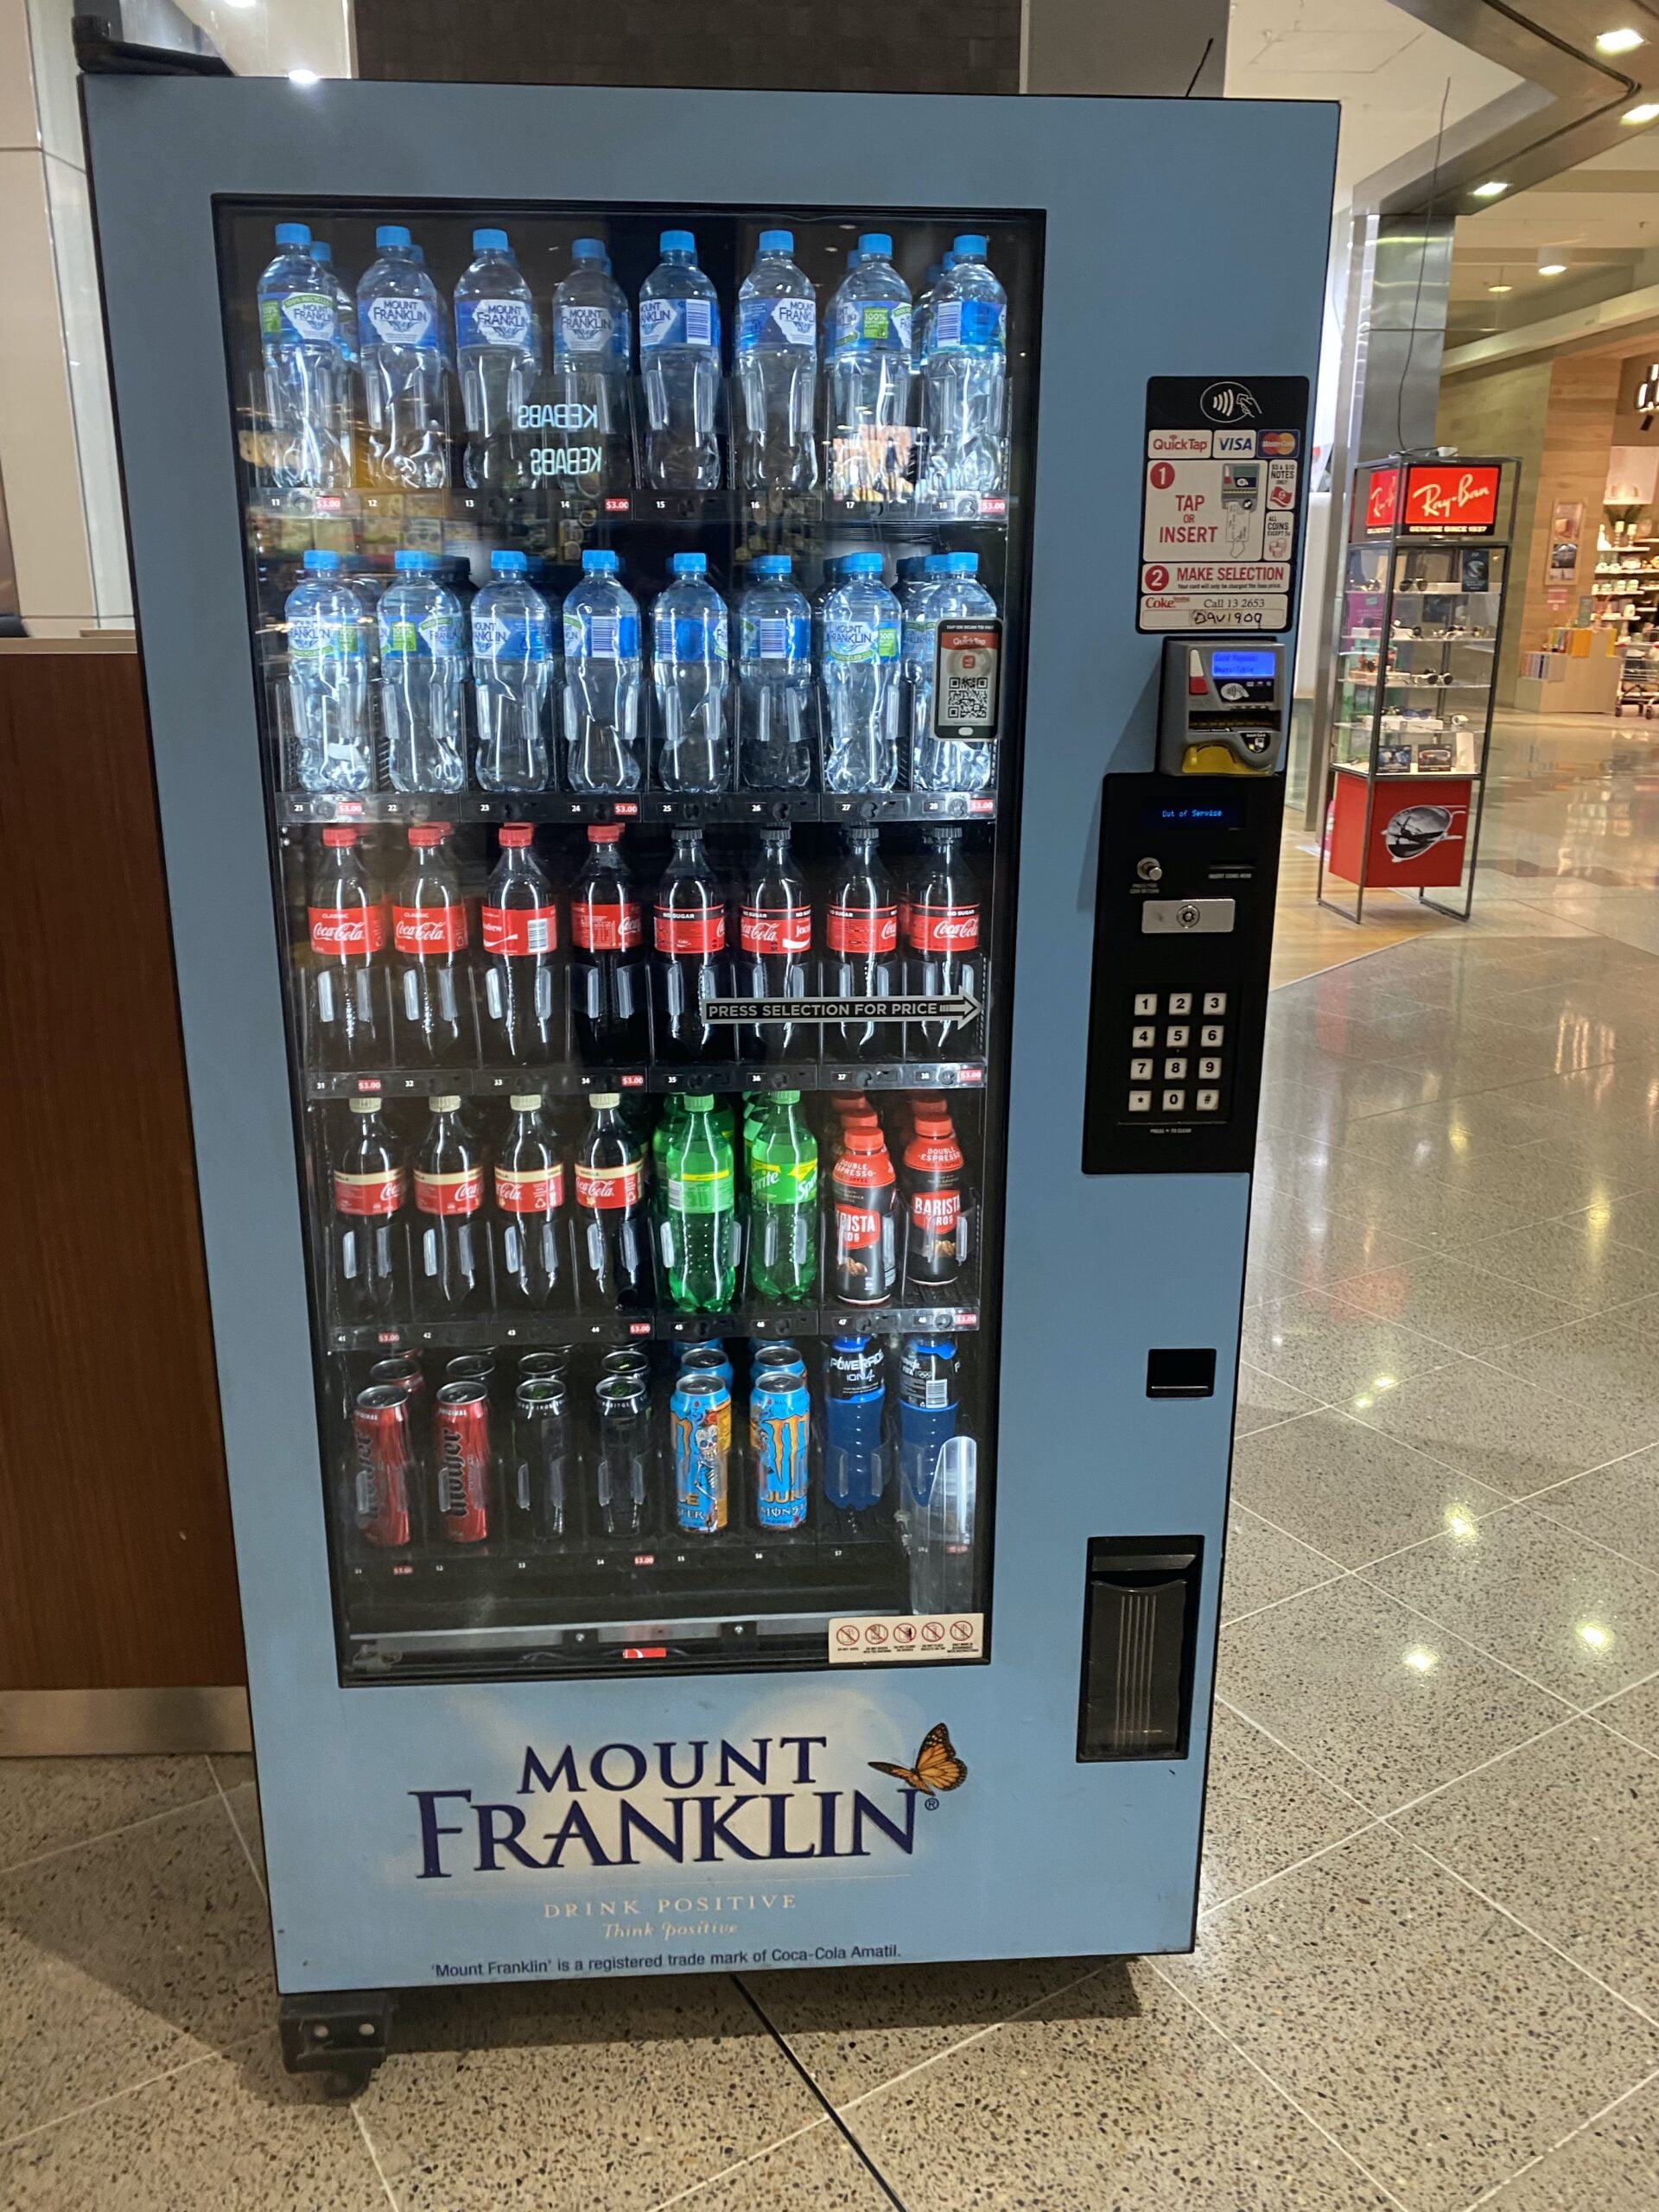 . Free Vend Coke Vending Machine Program